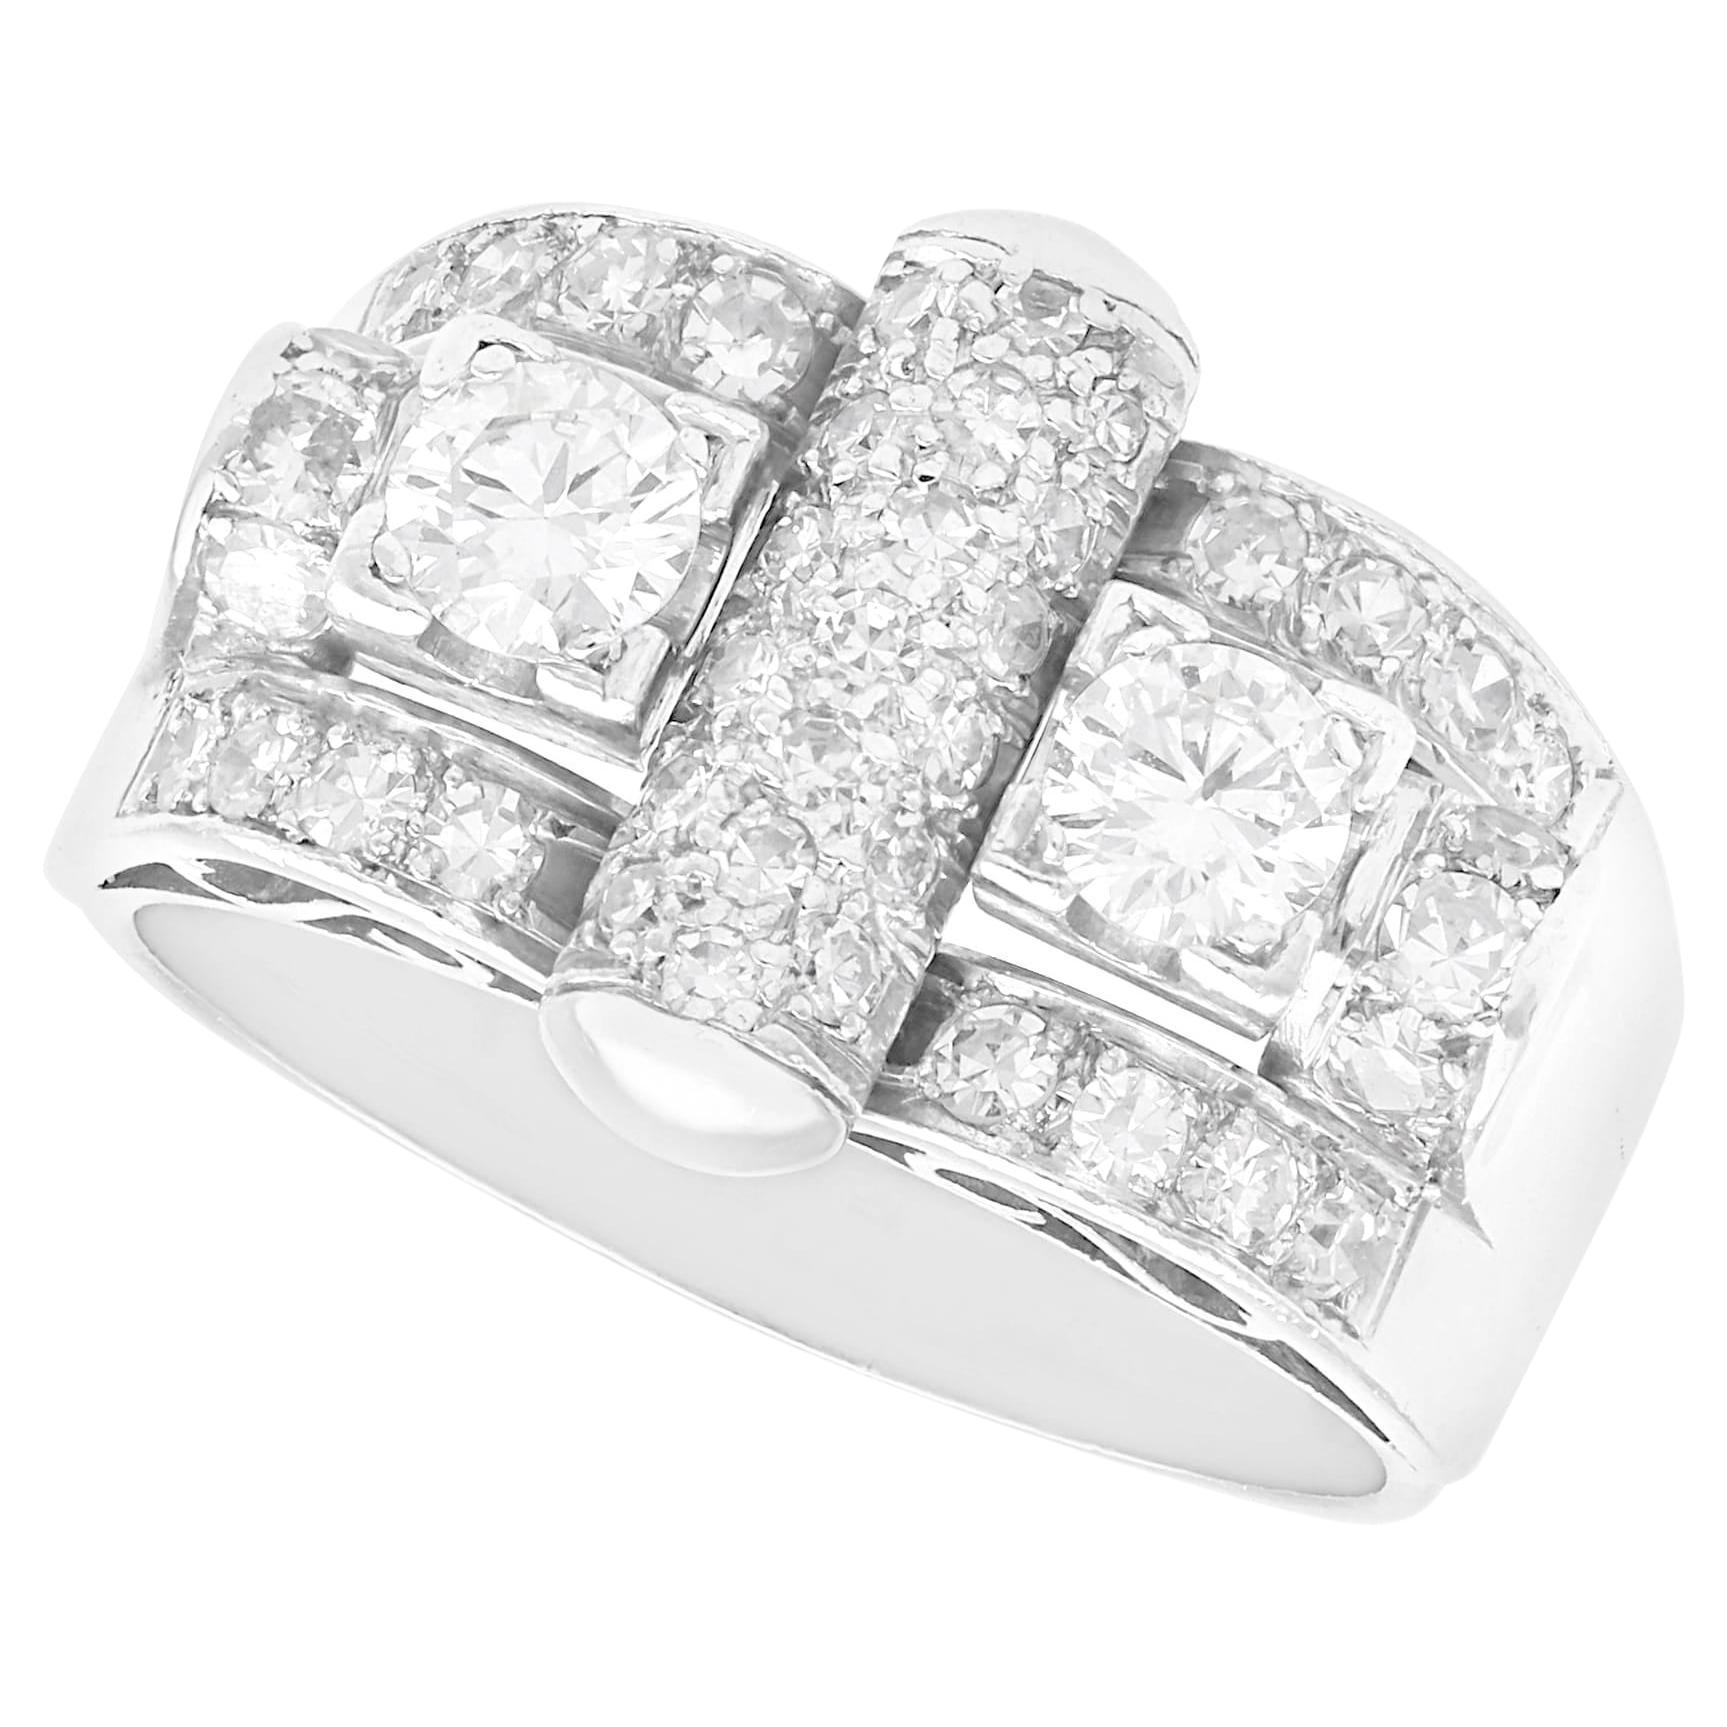 Antique Art Deco 1.01 Carat Diamond and Platinum Dress Ring For Sale